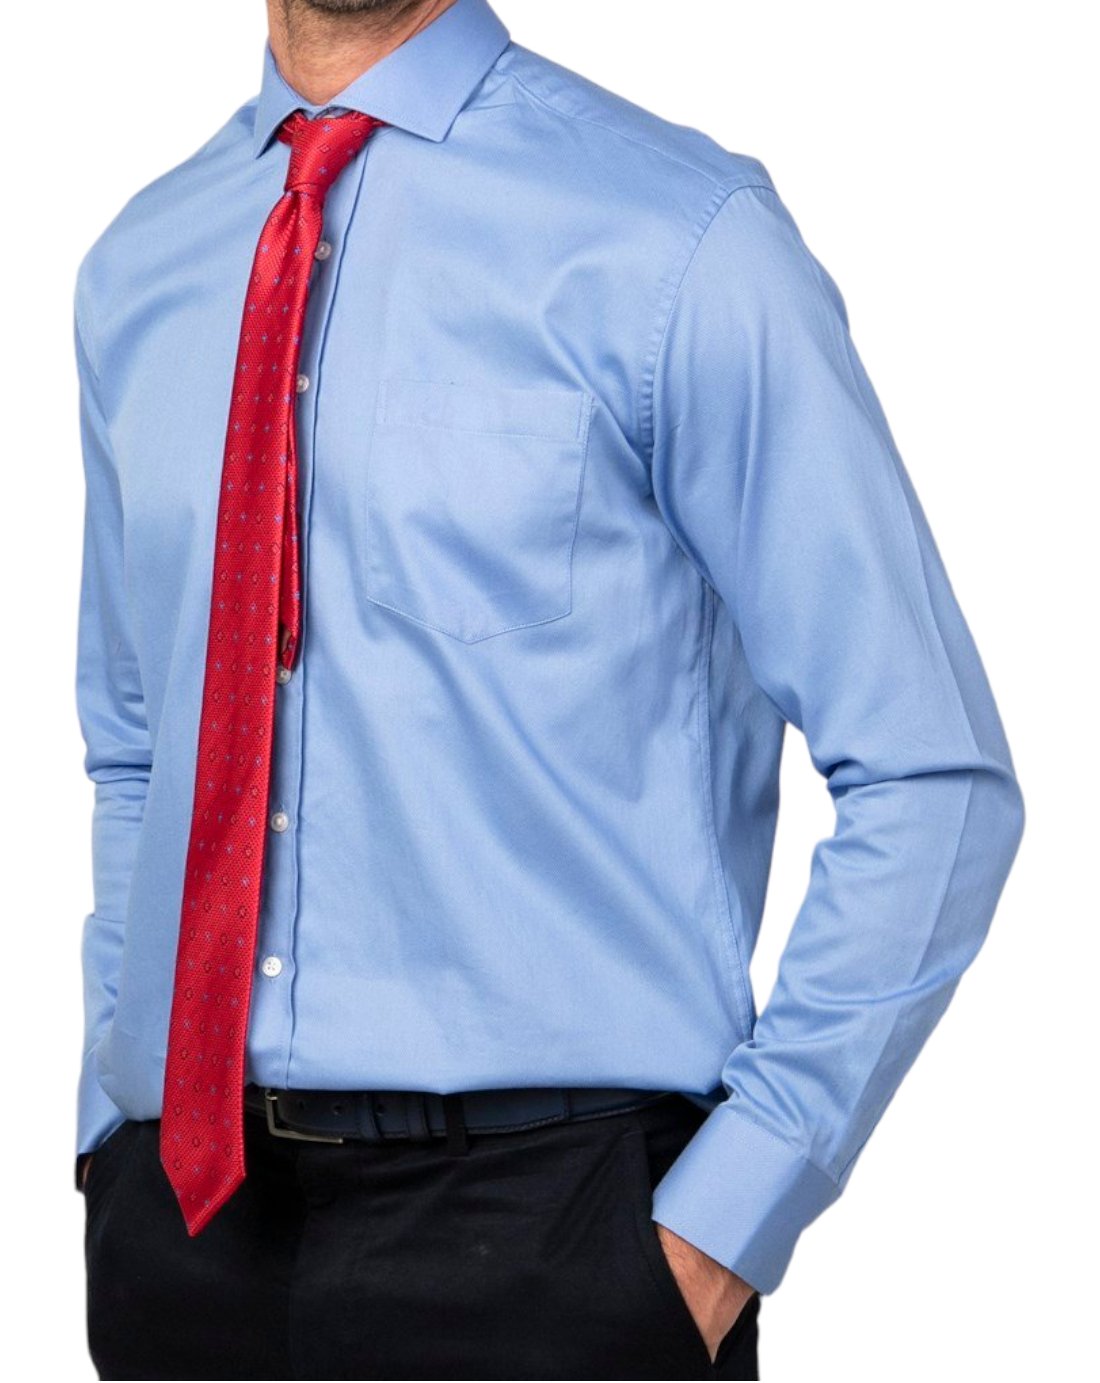 Classic Fit Blue Long Sleeve Cotton Shirt 99percenthandmade   